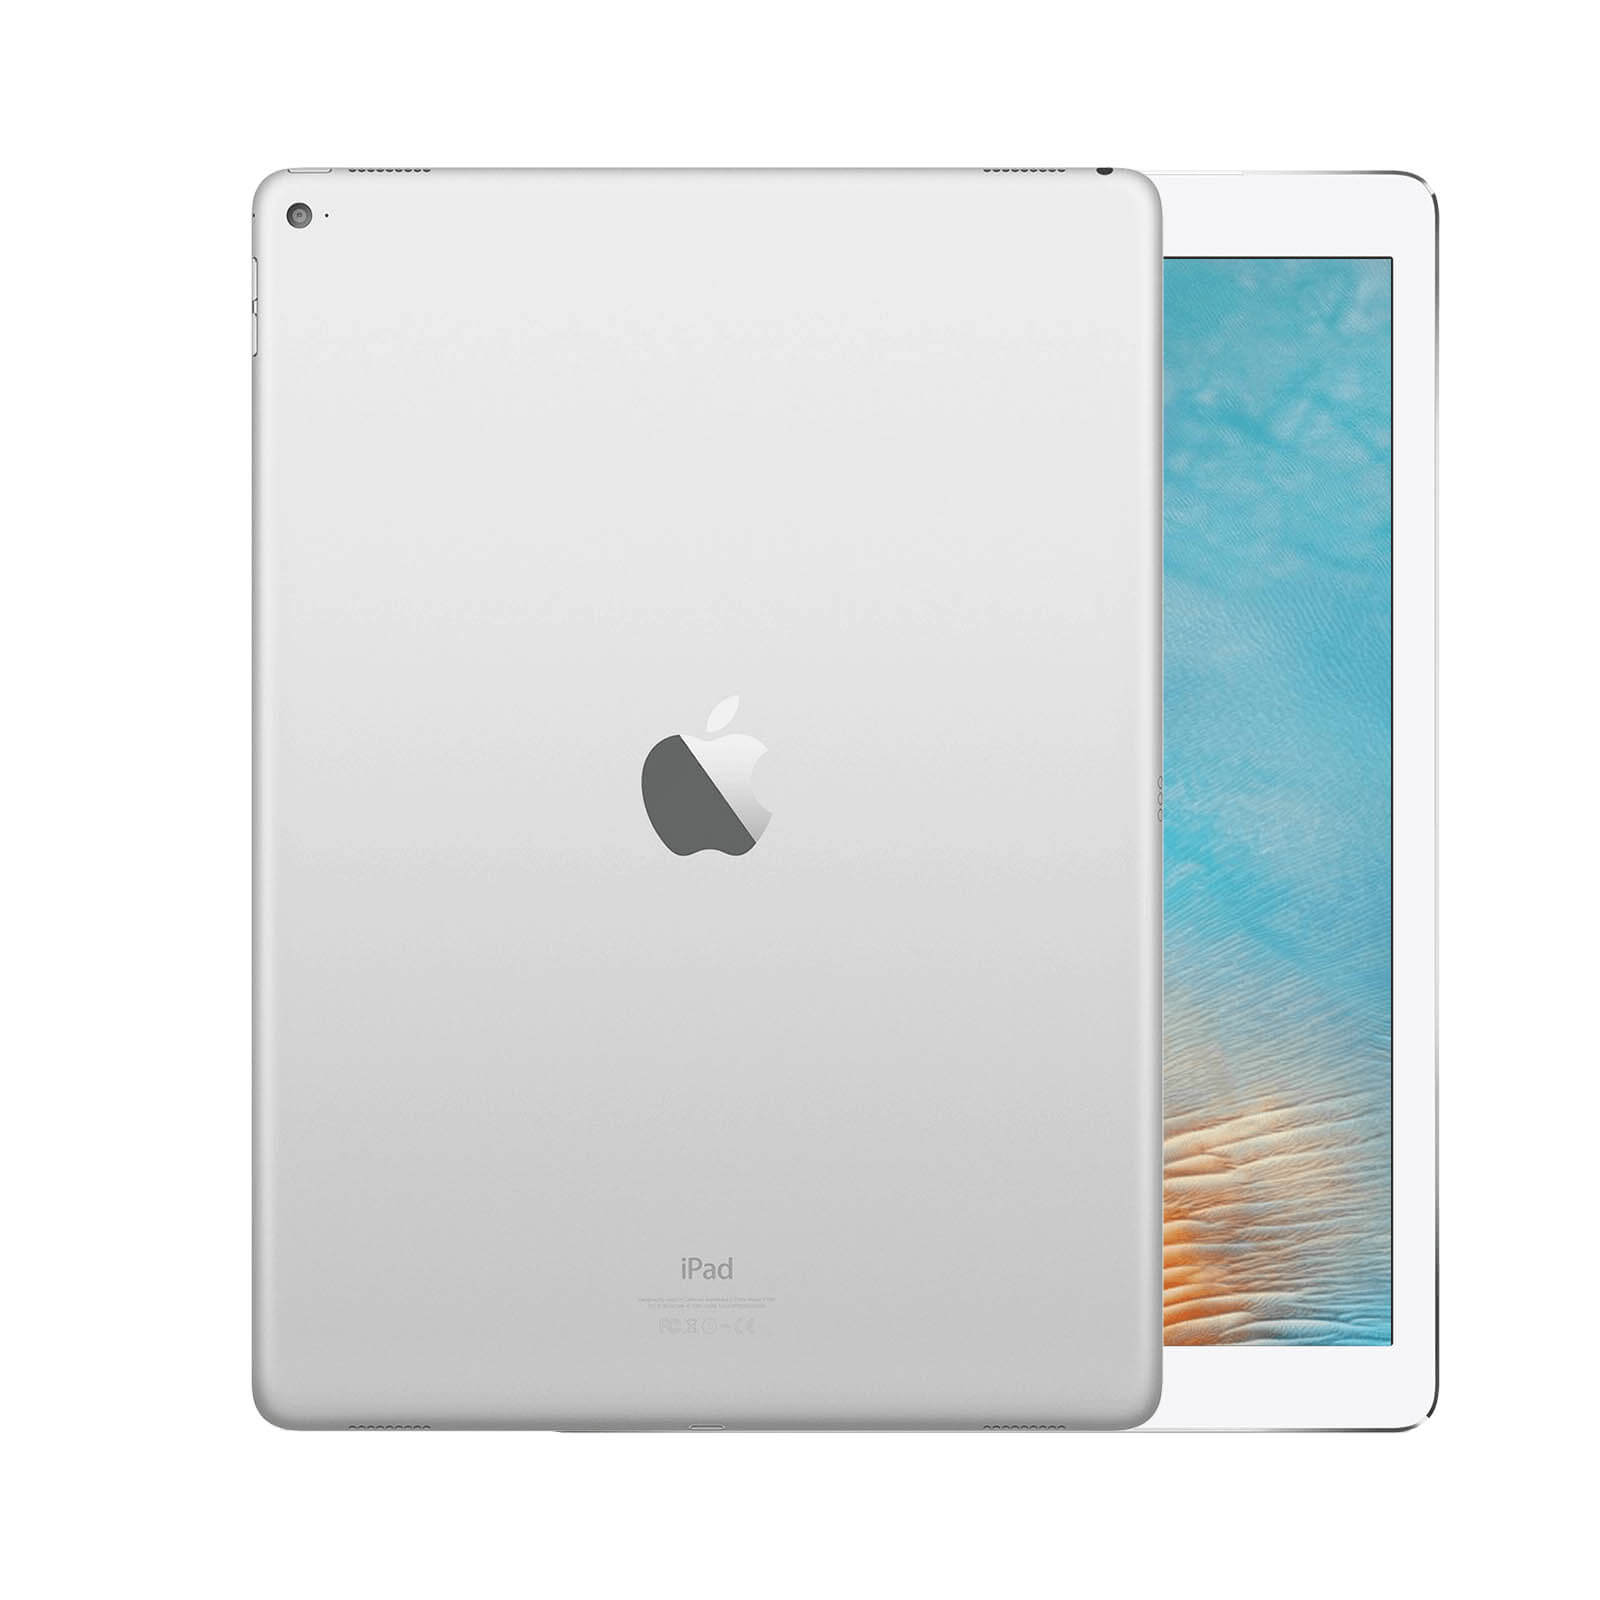 iPad Pro 12.9 Inch 3rd Gen 256GB Silver Good - WiFi